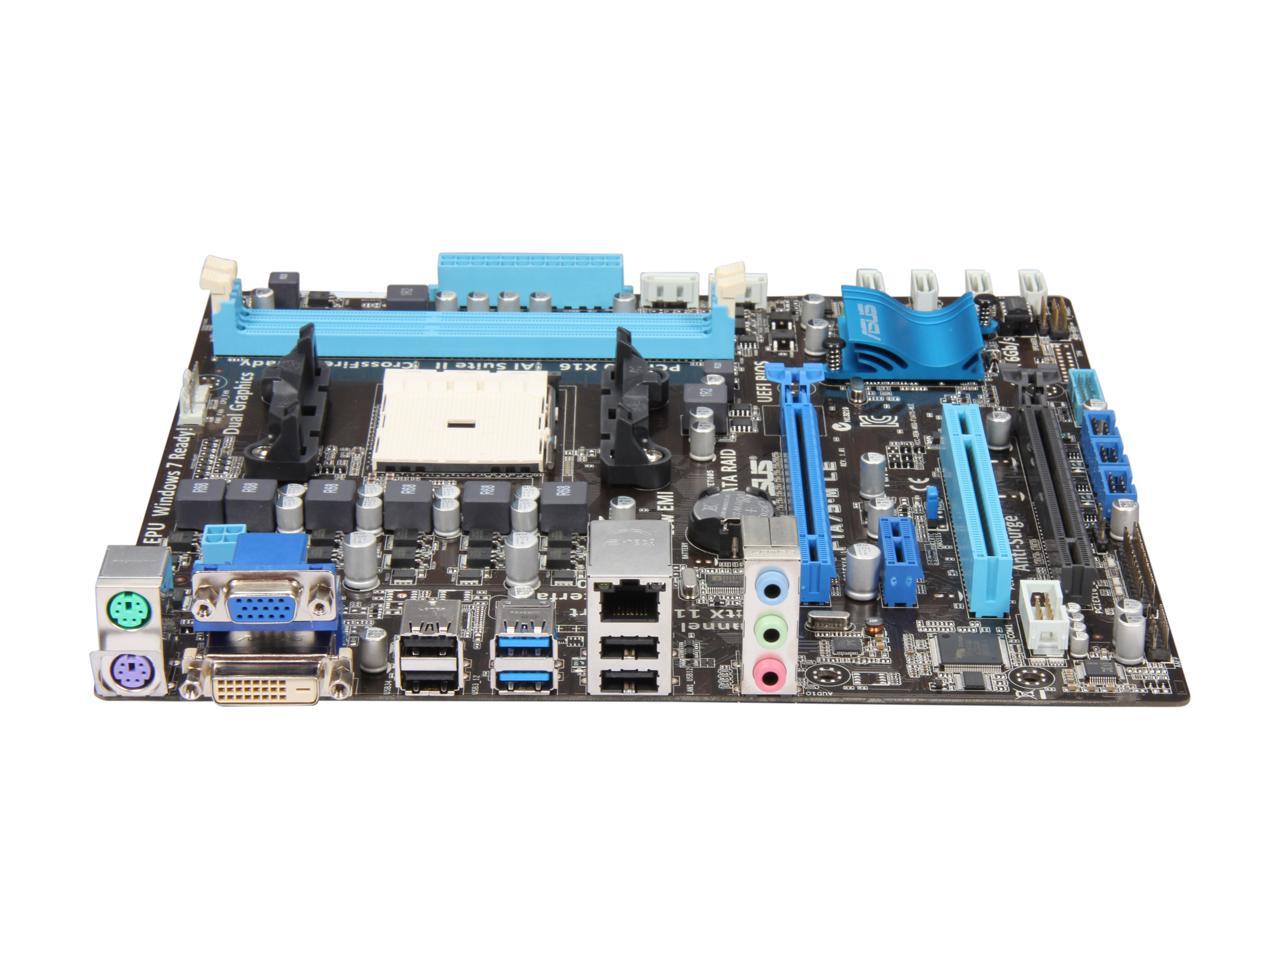 ASUS F1A75-M LE FM1 AMD A75 (Hudson D3) SATA 6Gb/s USB 3.0 Micro ATX AMD Motherboard with UEFI BIOS